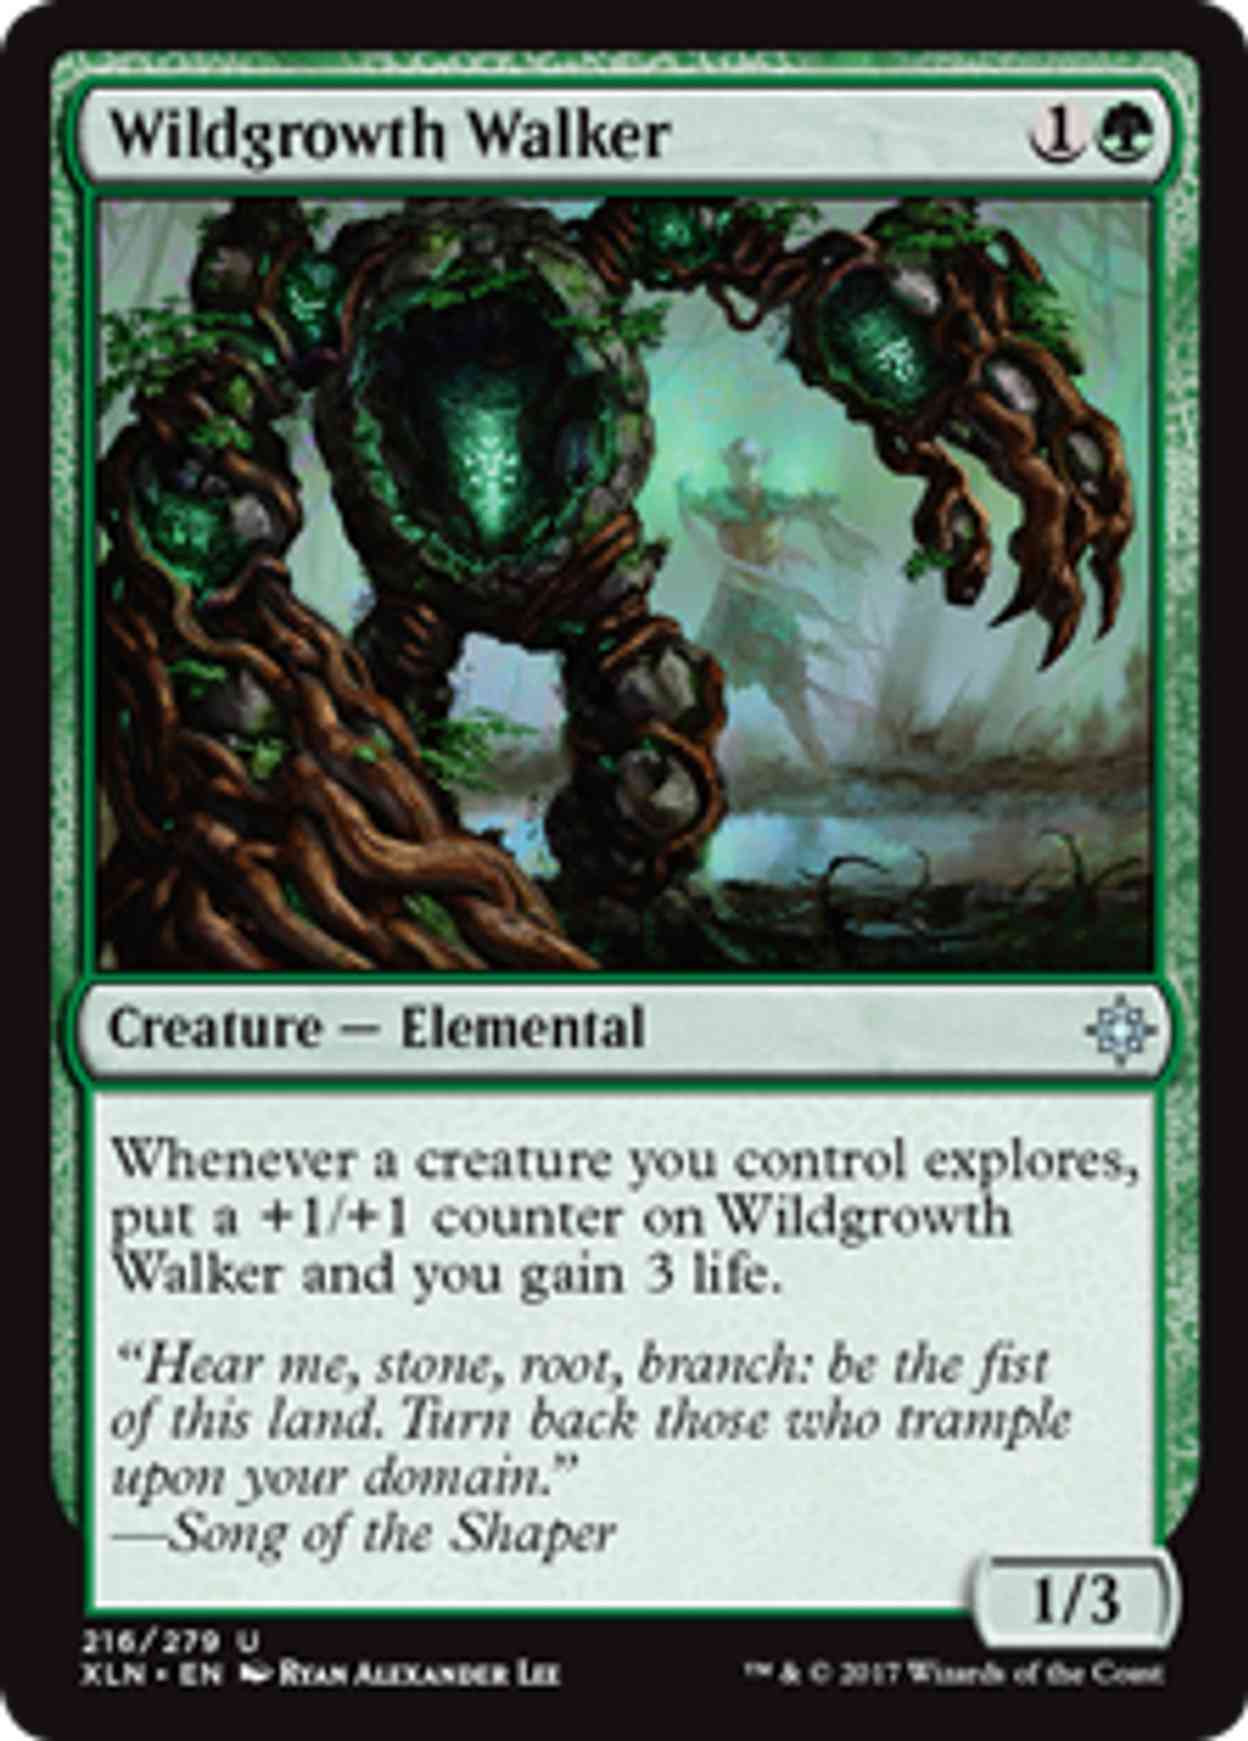 Wildgrowth Walker magic card front